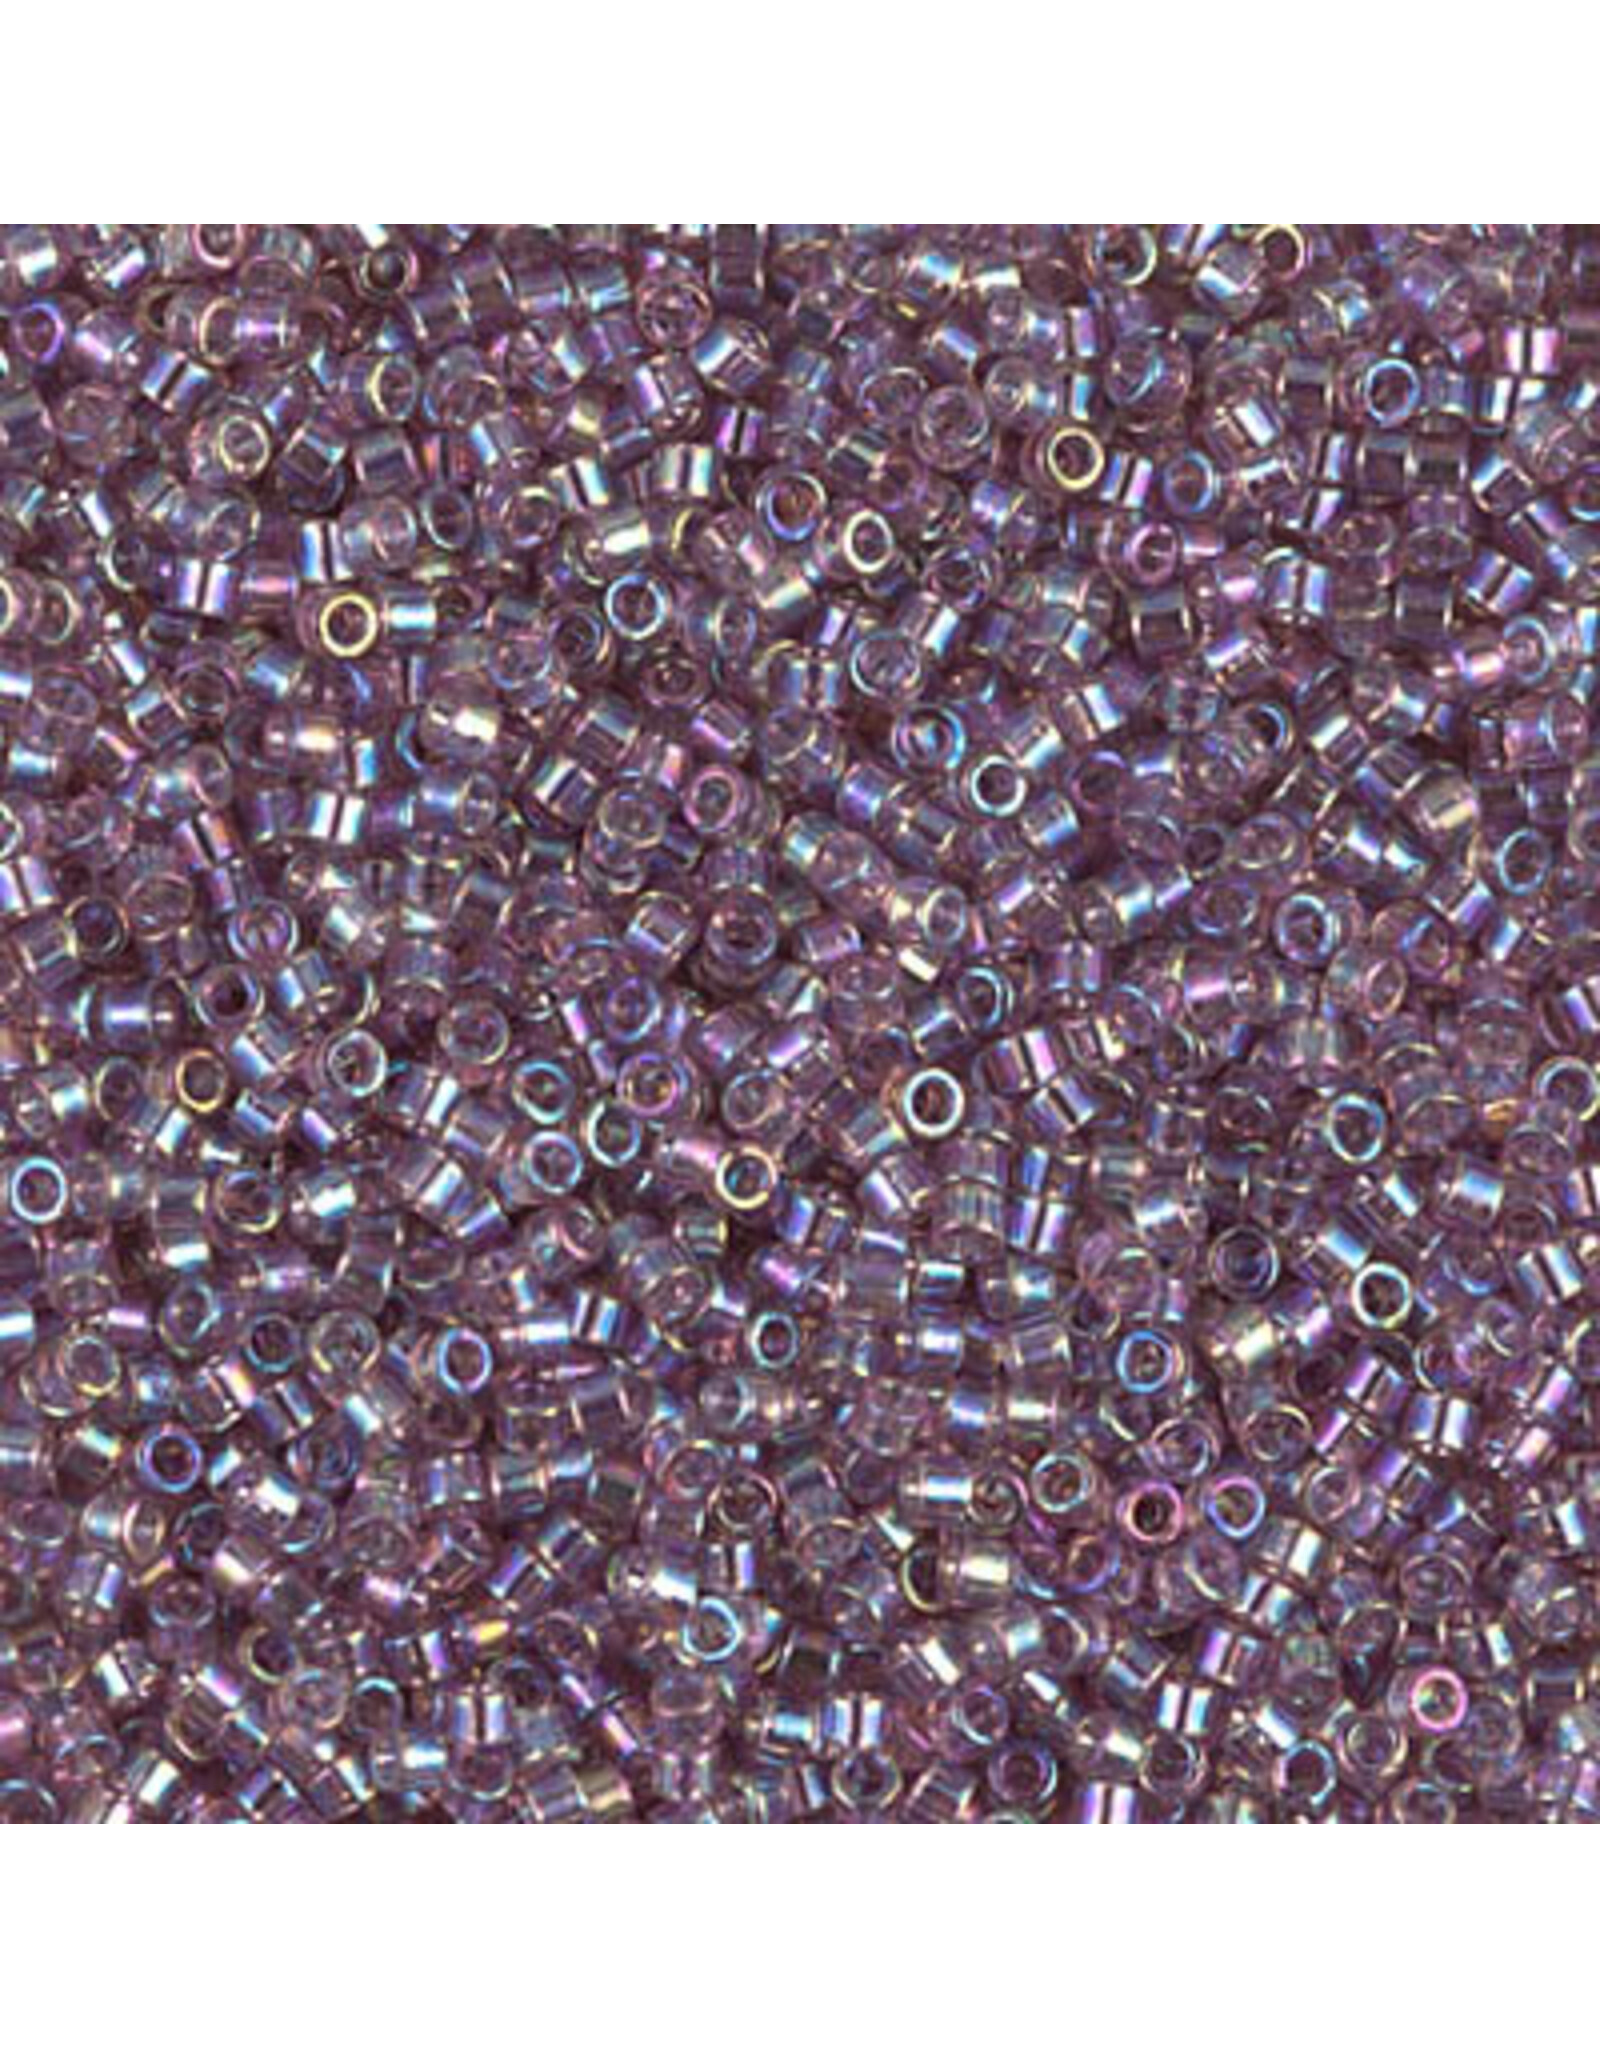 db173 11 Delica 3.5g  Light Amethyst Purple AB